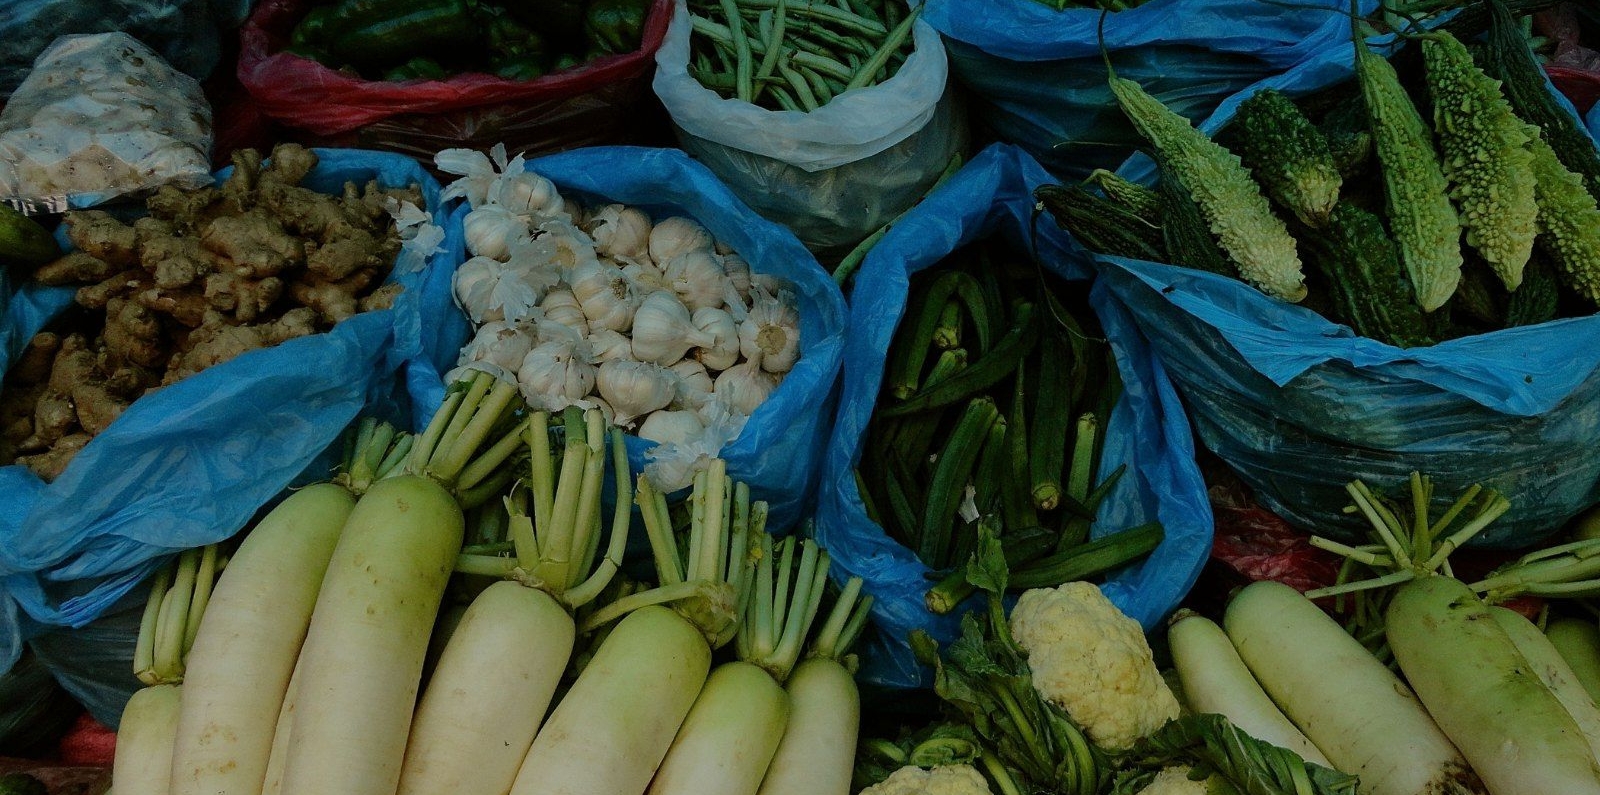 Nepal Vegetable Market